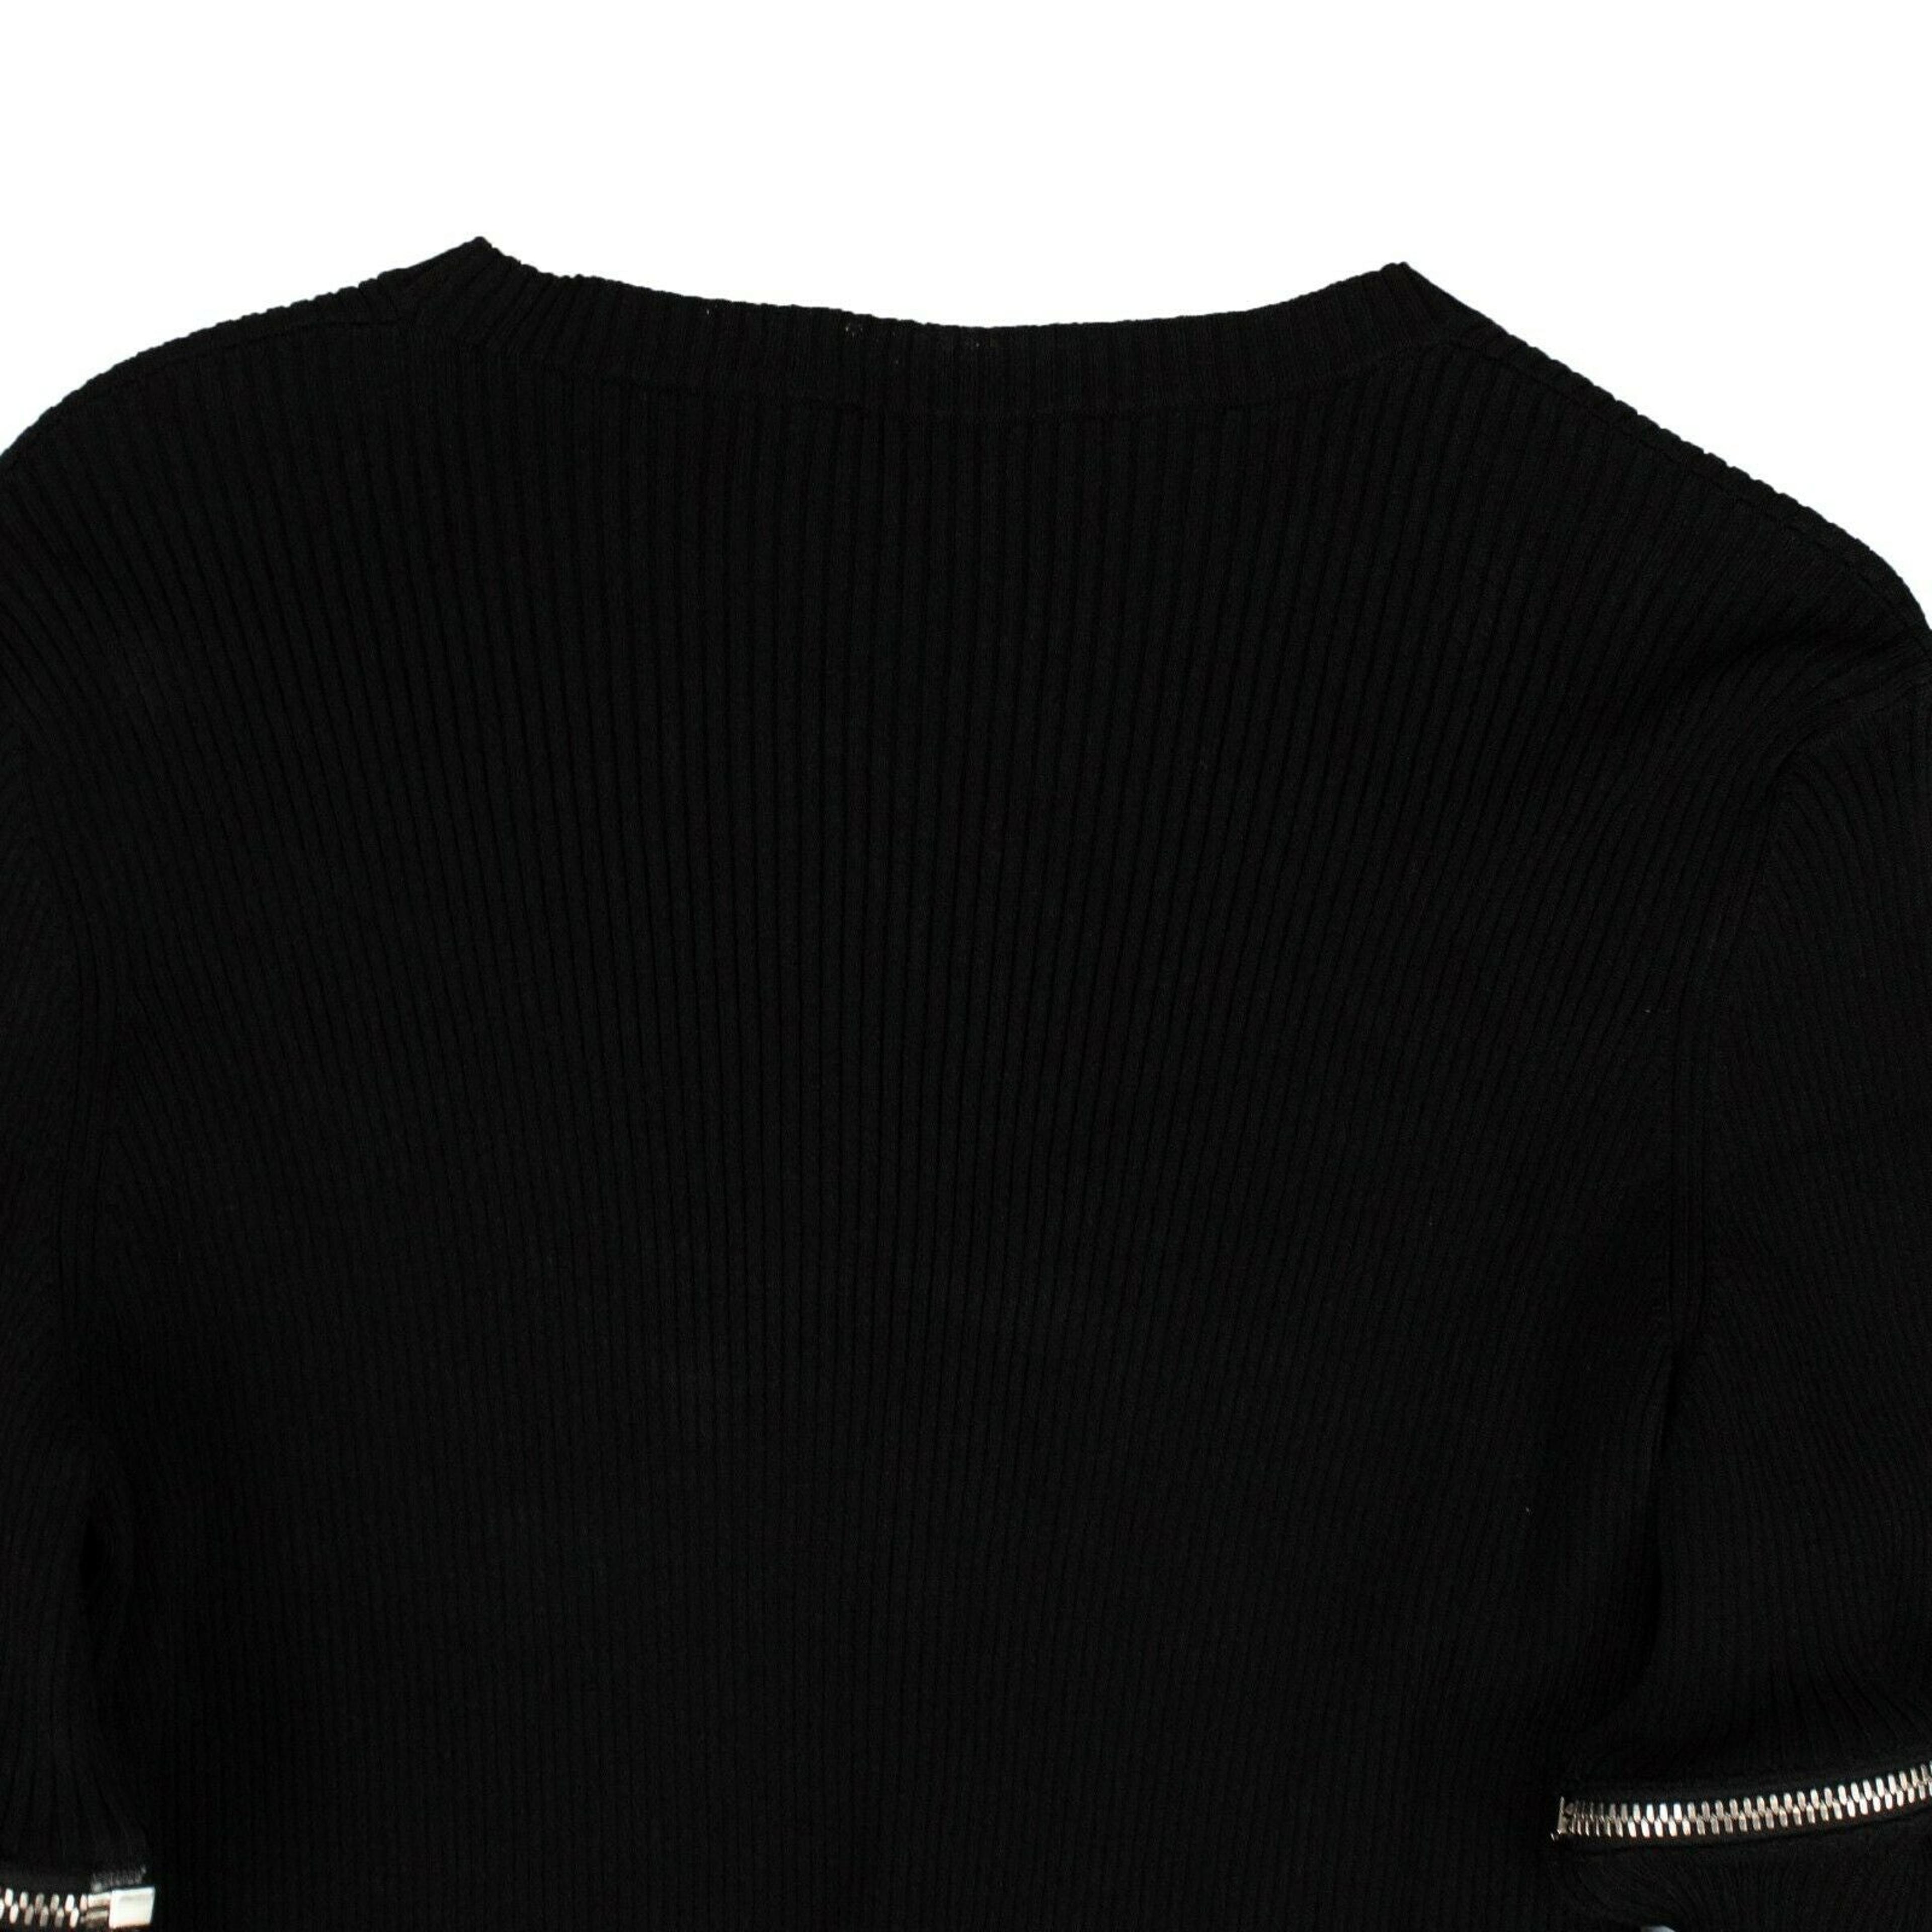 Alternate View 3 of Women's Black Zipped Rouches Sweater